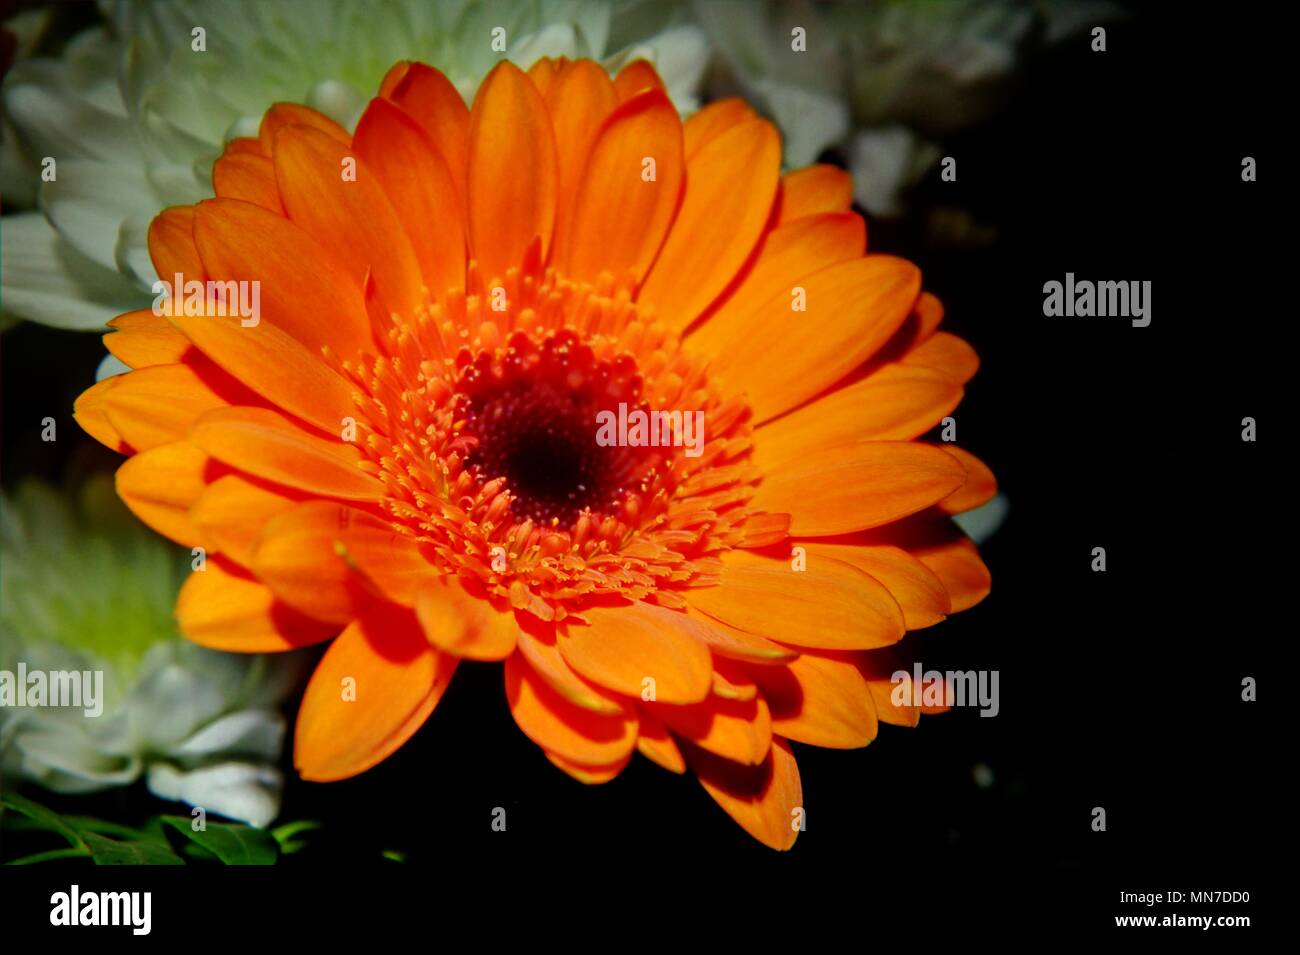 Single large orange Gerbera flower with dark background. Stock Photo